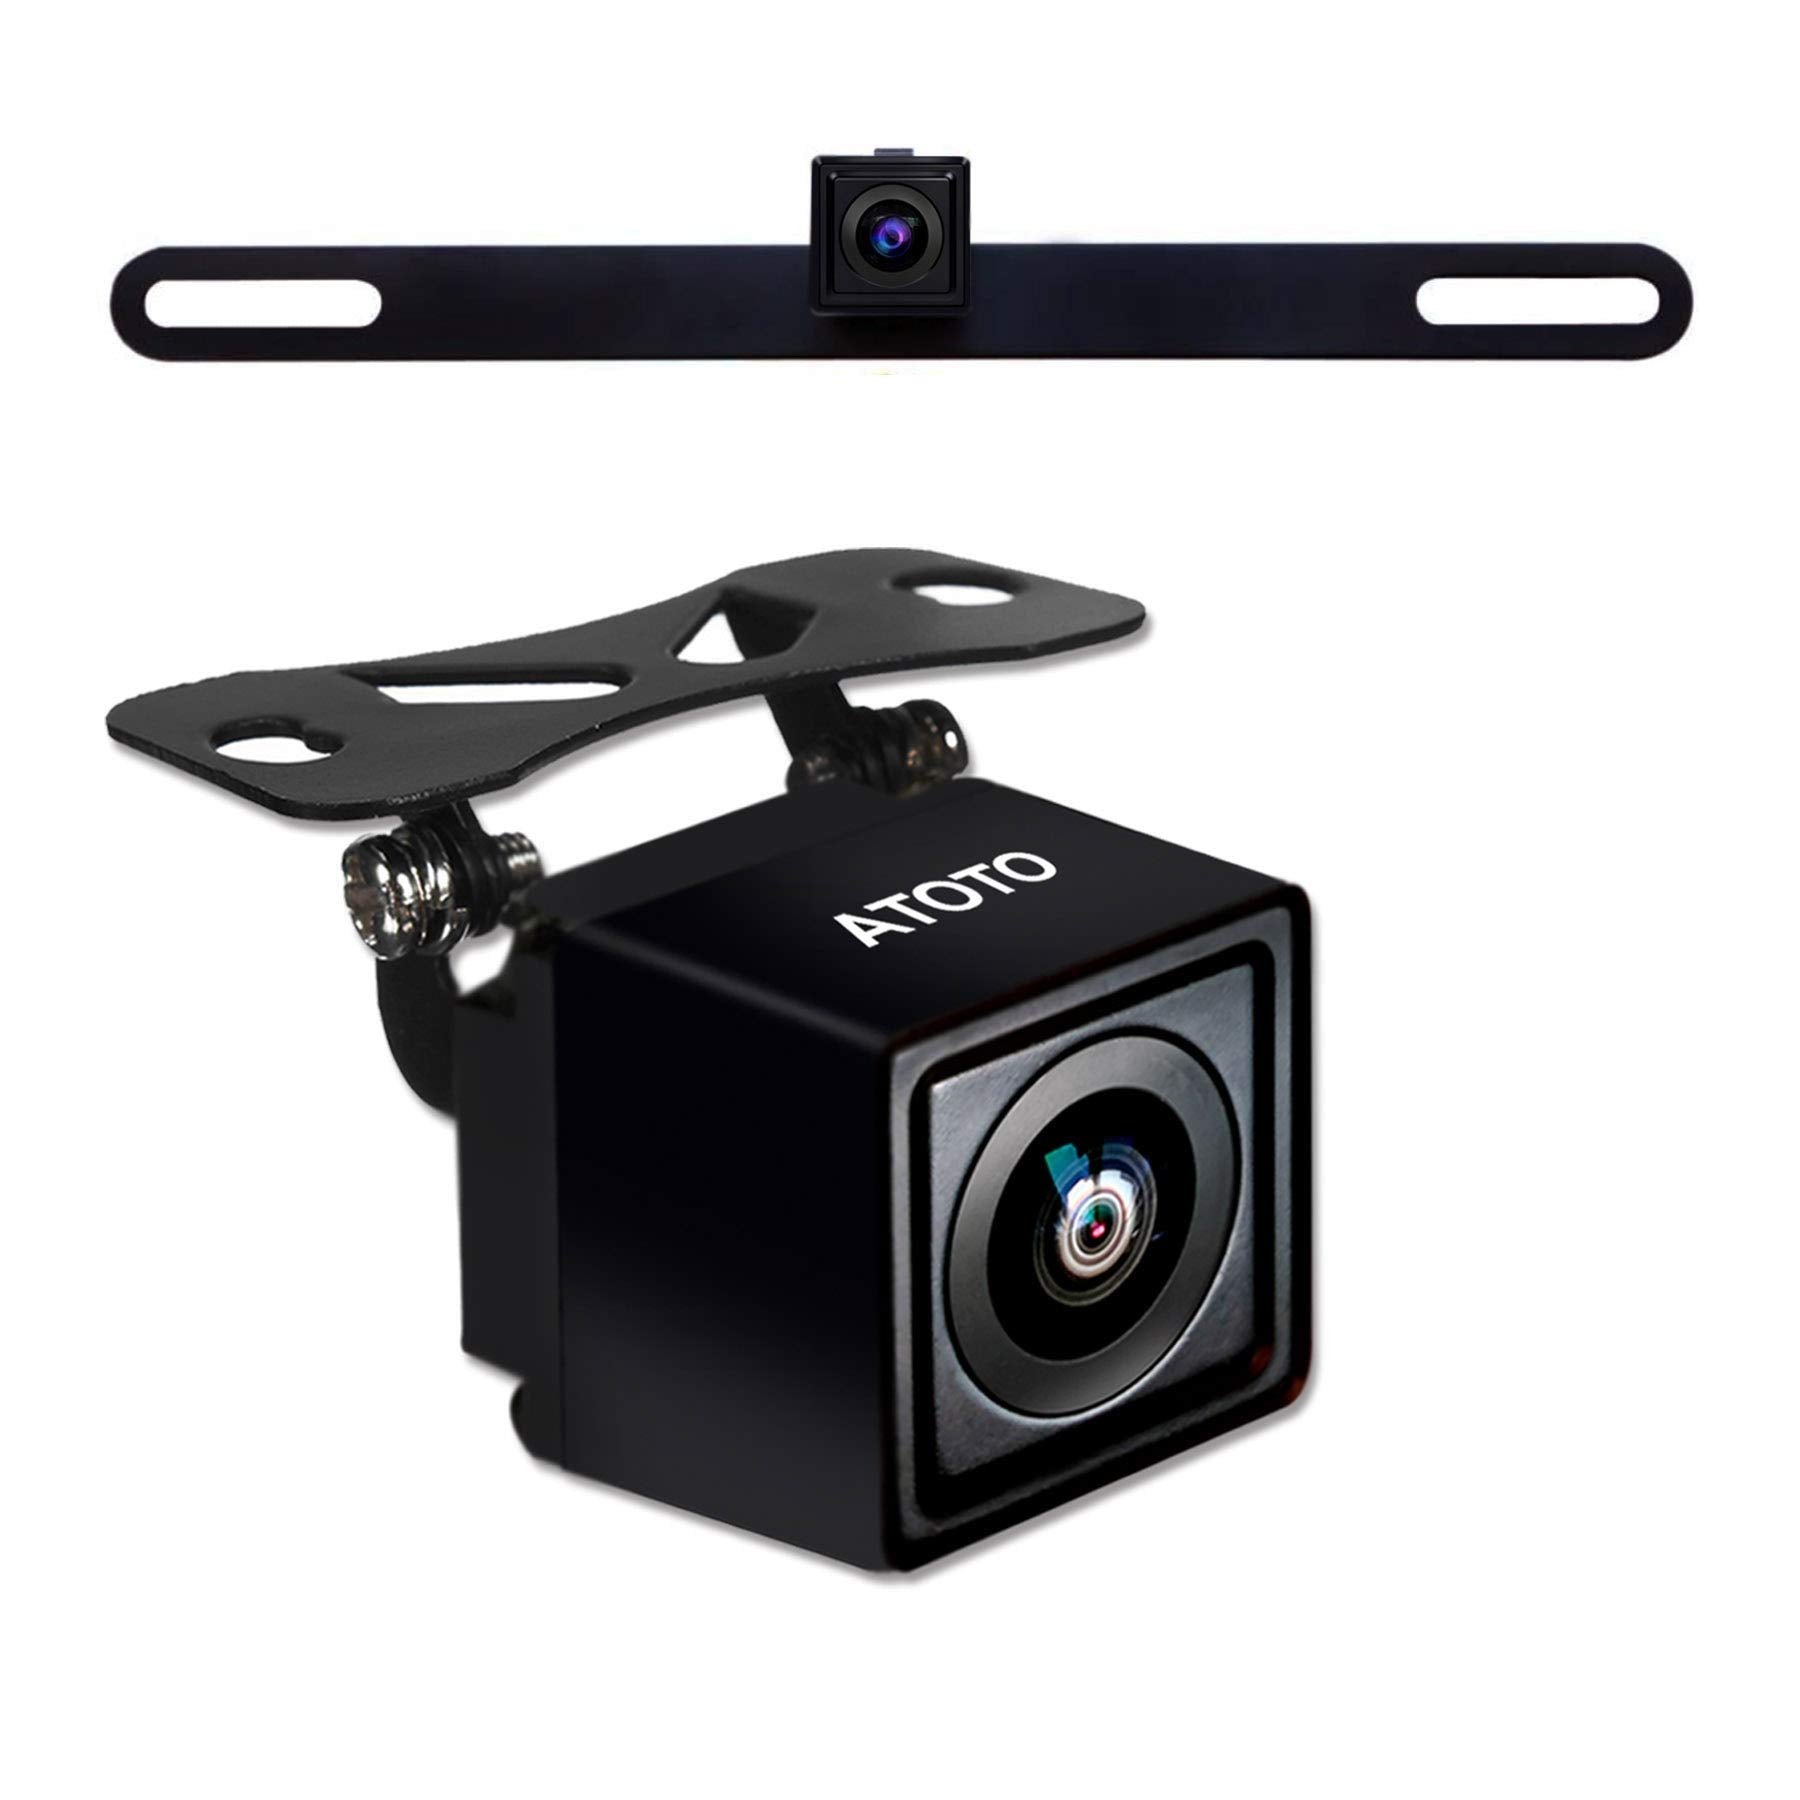 ATOTO AC-HD03LR Rear Camera for ATOTO S8, Includes Virtual Surround View Feature